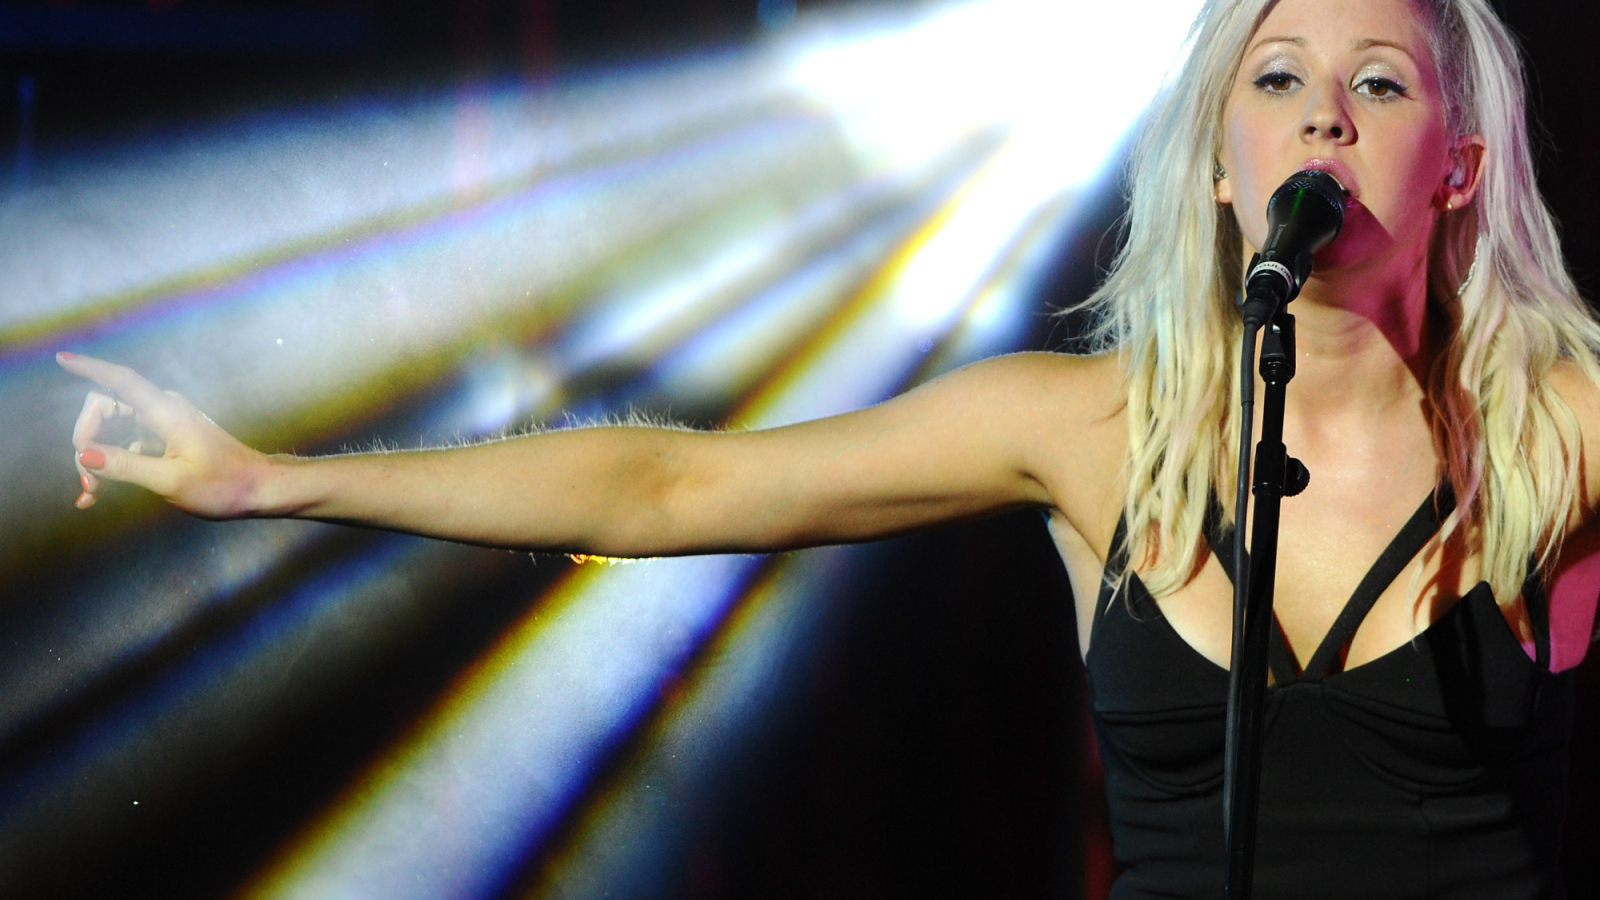 Певица Ellie Goulding исполняет песню Burn